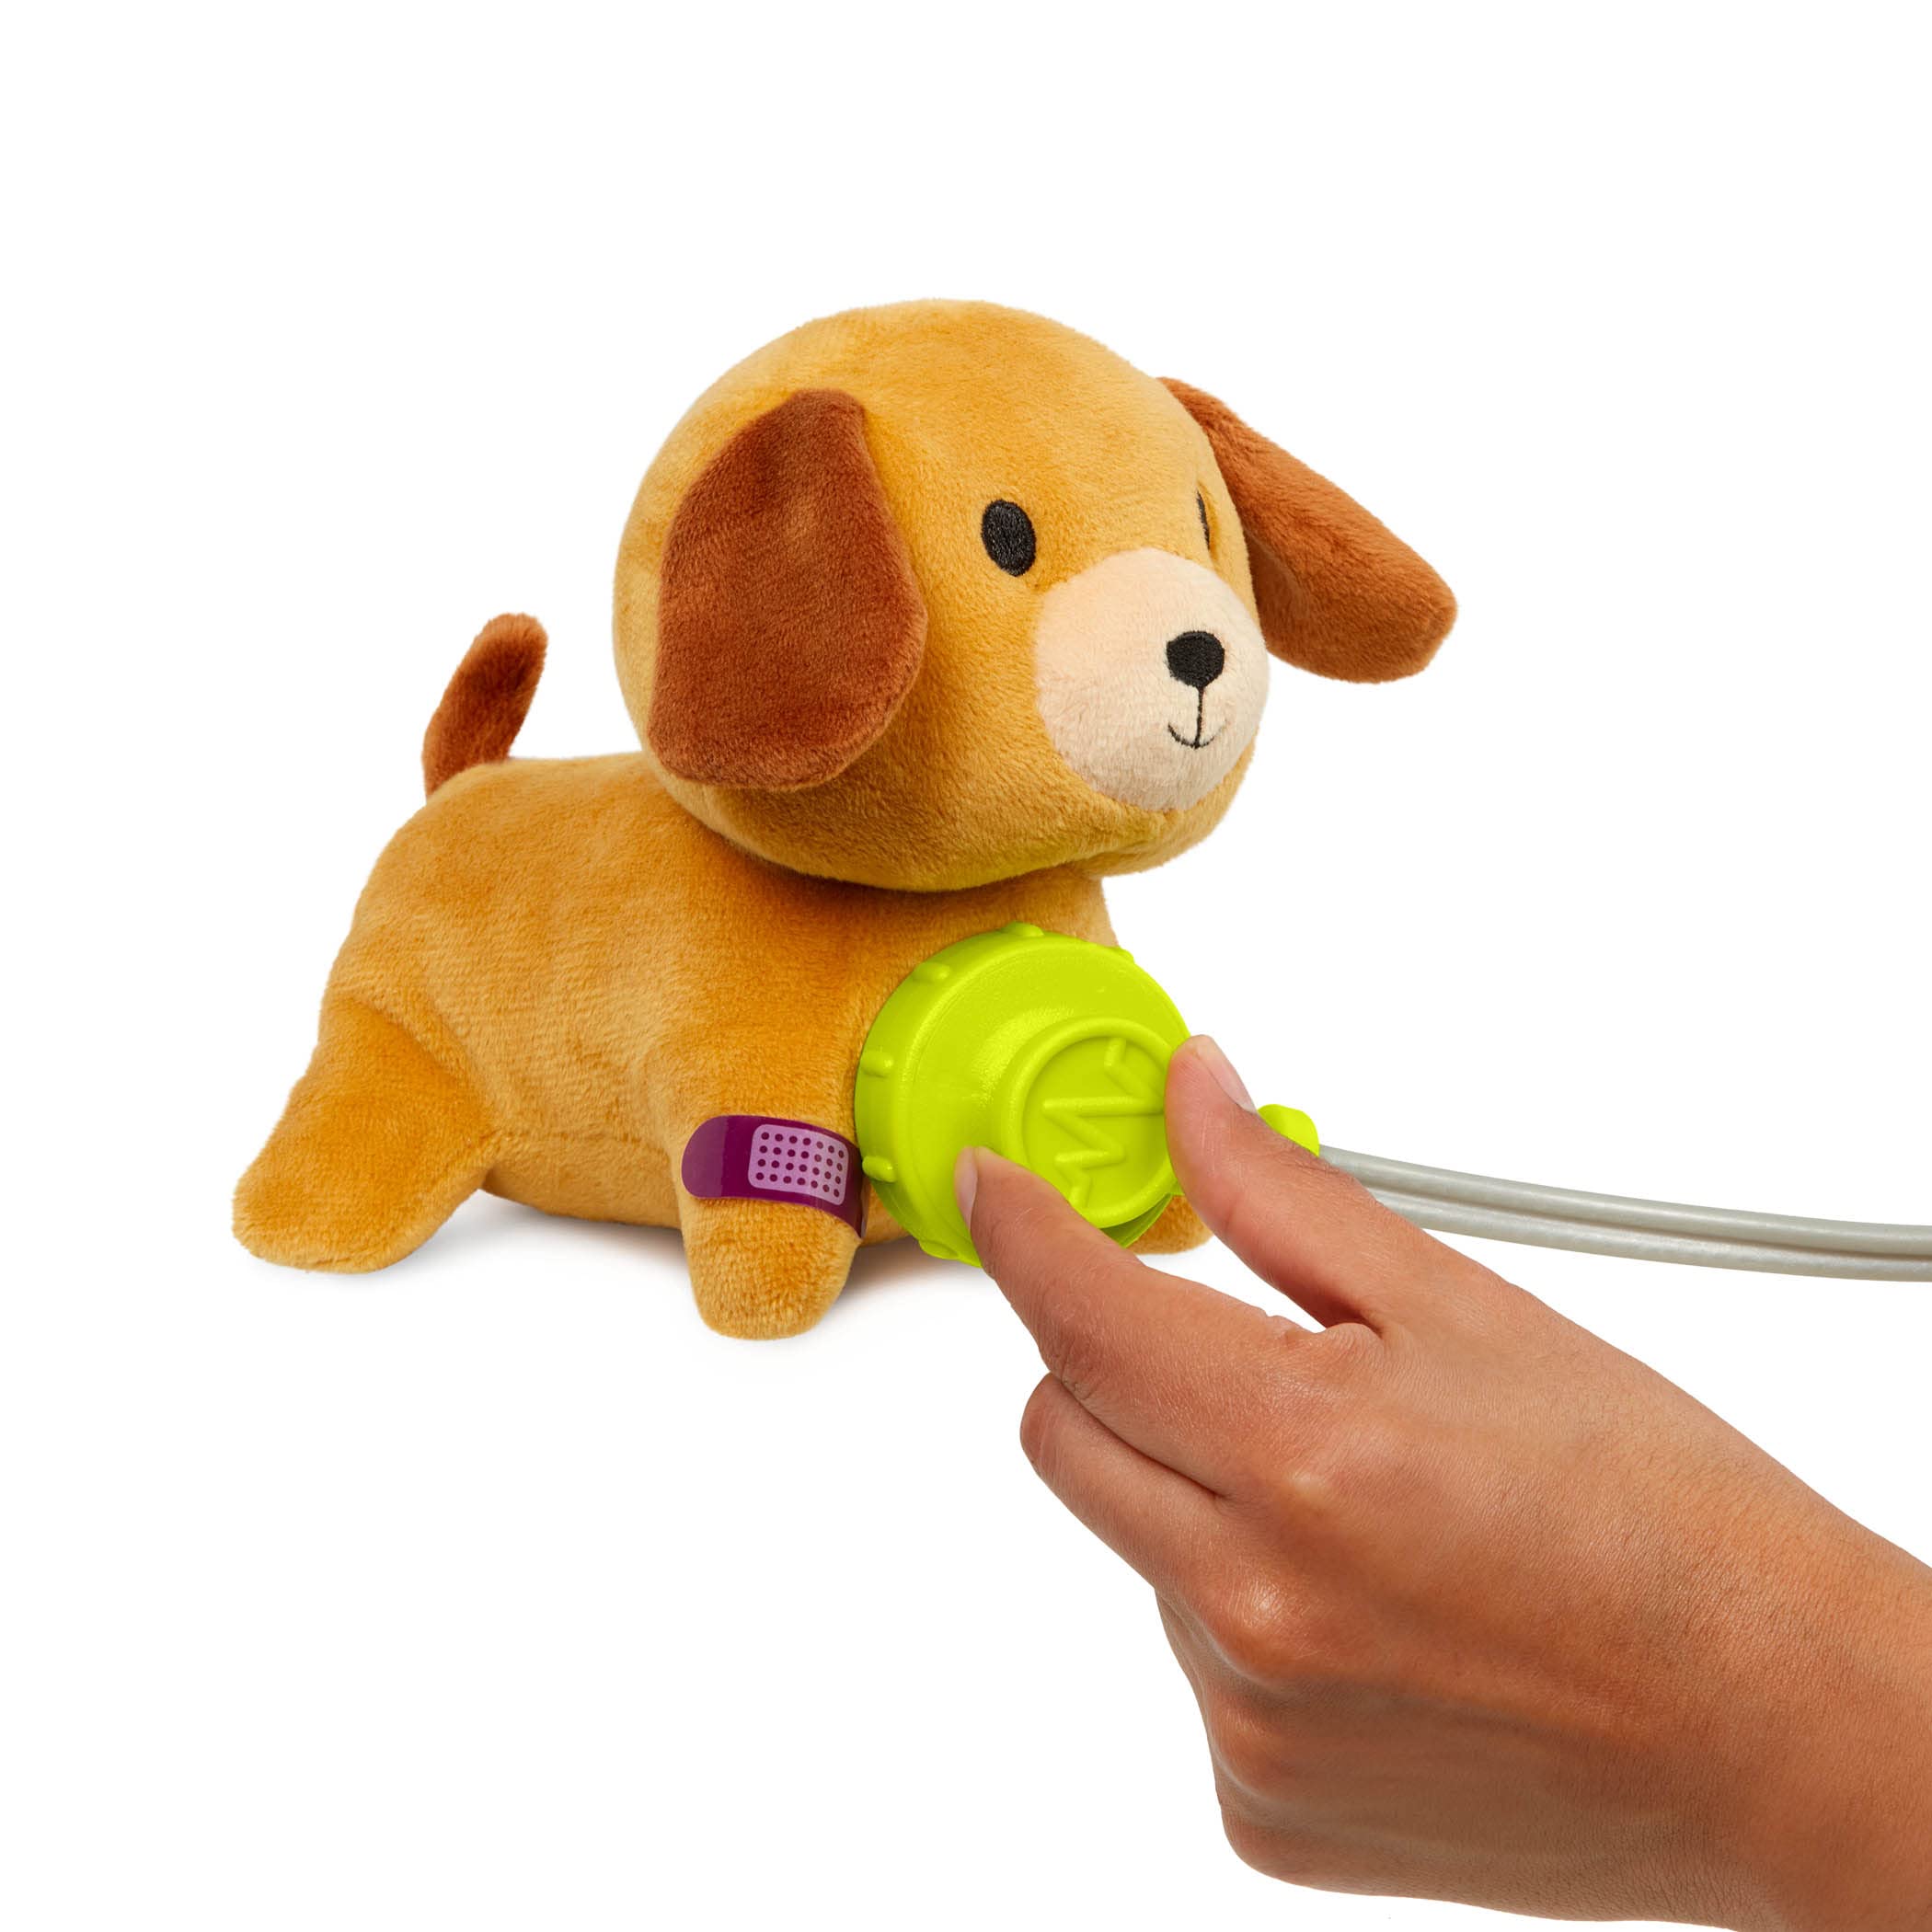 Battat – Vet Play Sets for Kids – Kids Veterinary Playset – Toy Puppy – Veterinarian Kit Toy – 2 Years + – Puppy Care Vet Kit